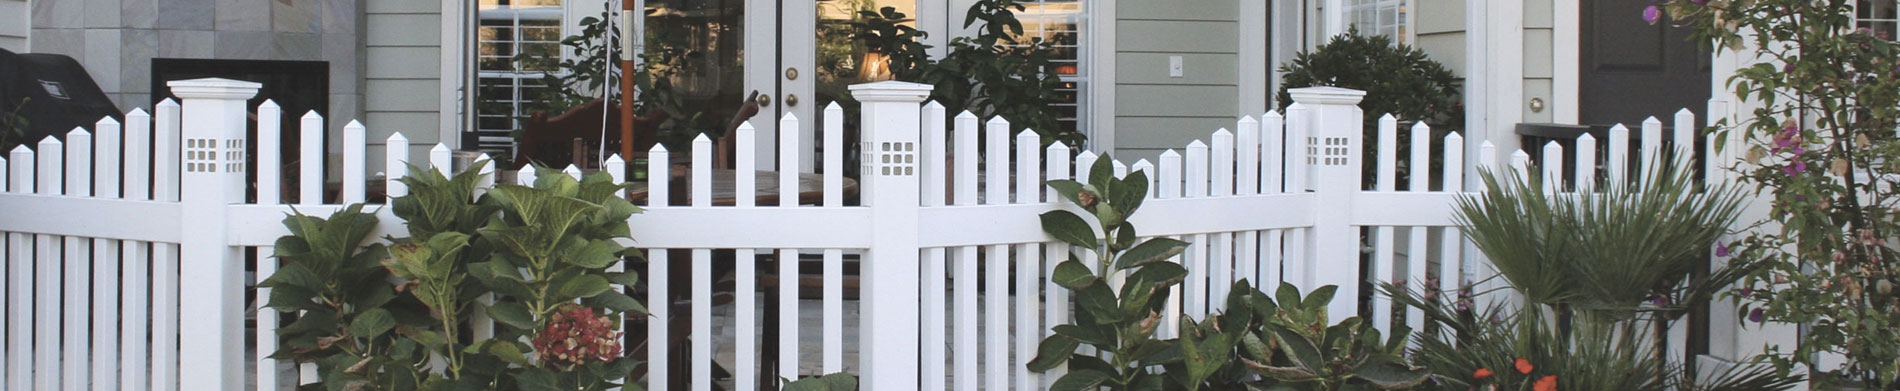 Install a vinyl fence around your property – Choose custom vinyl fencing